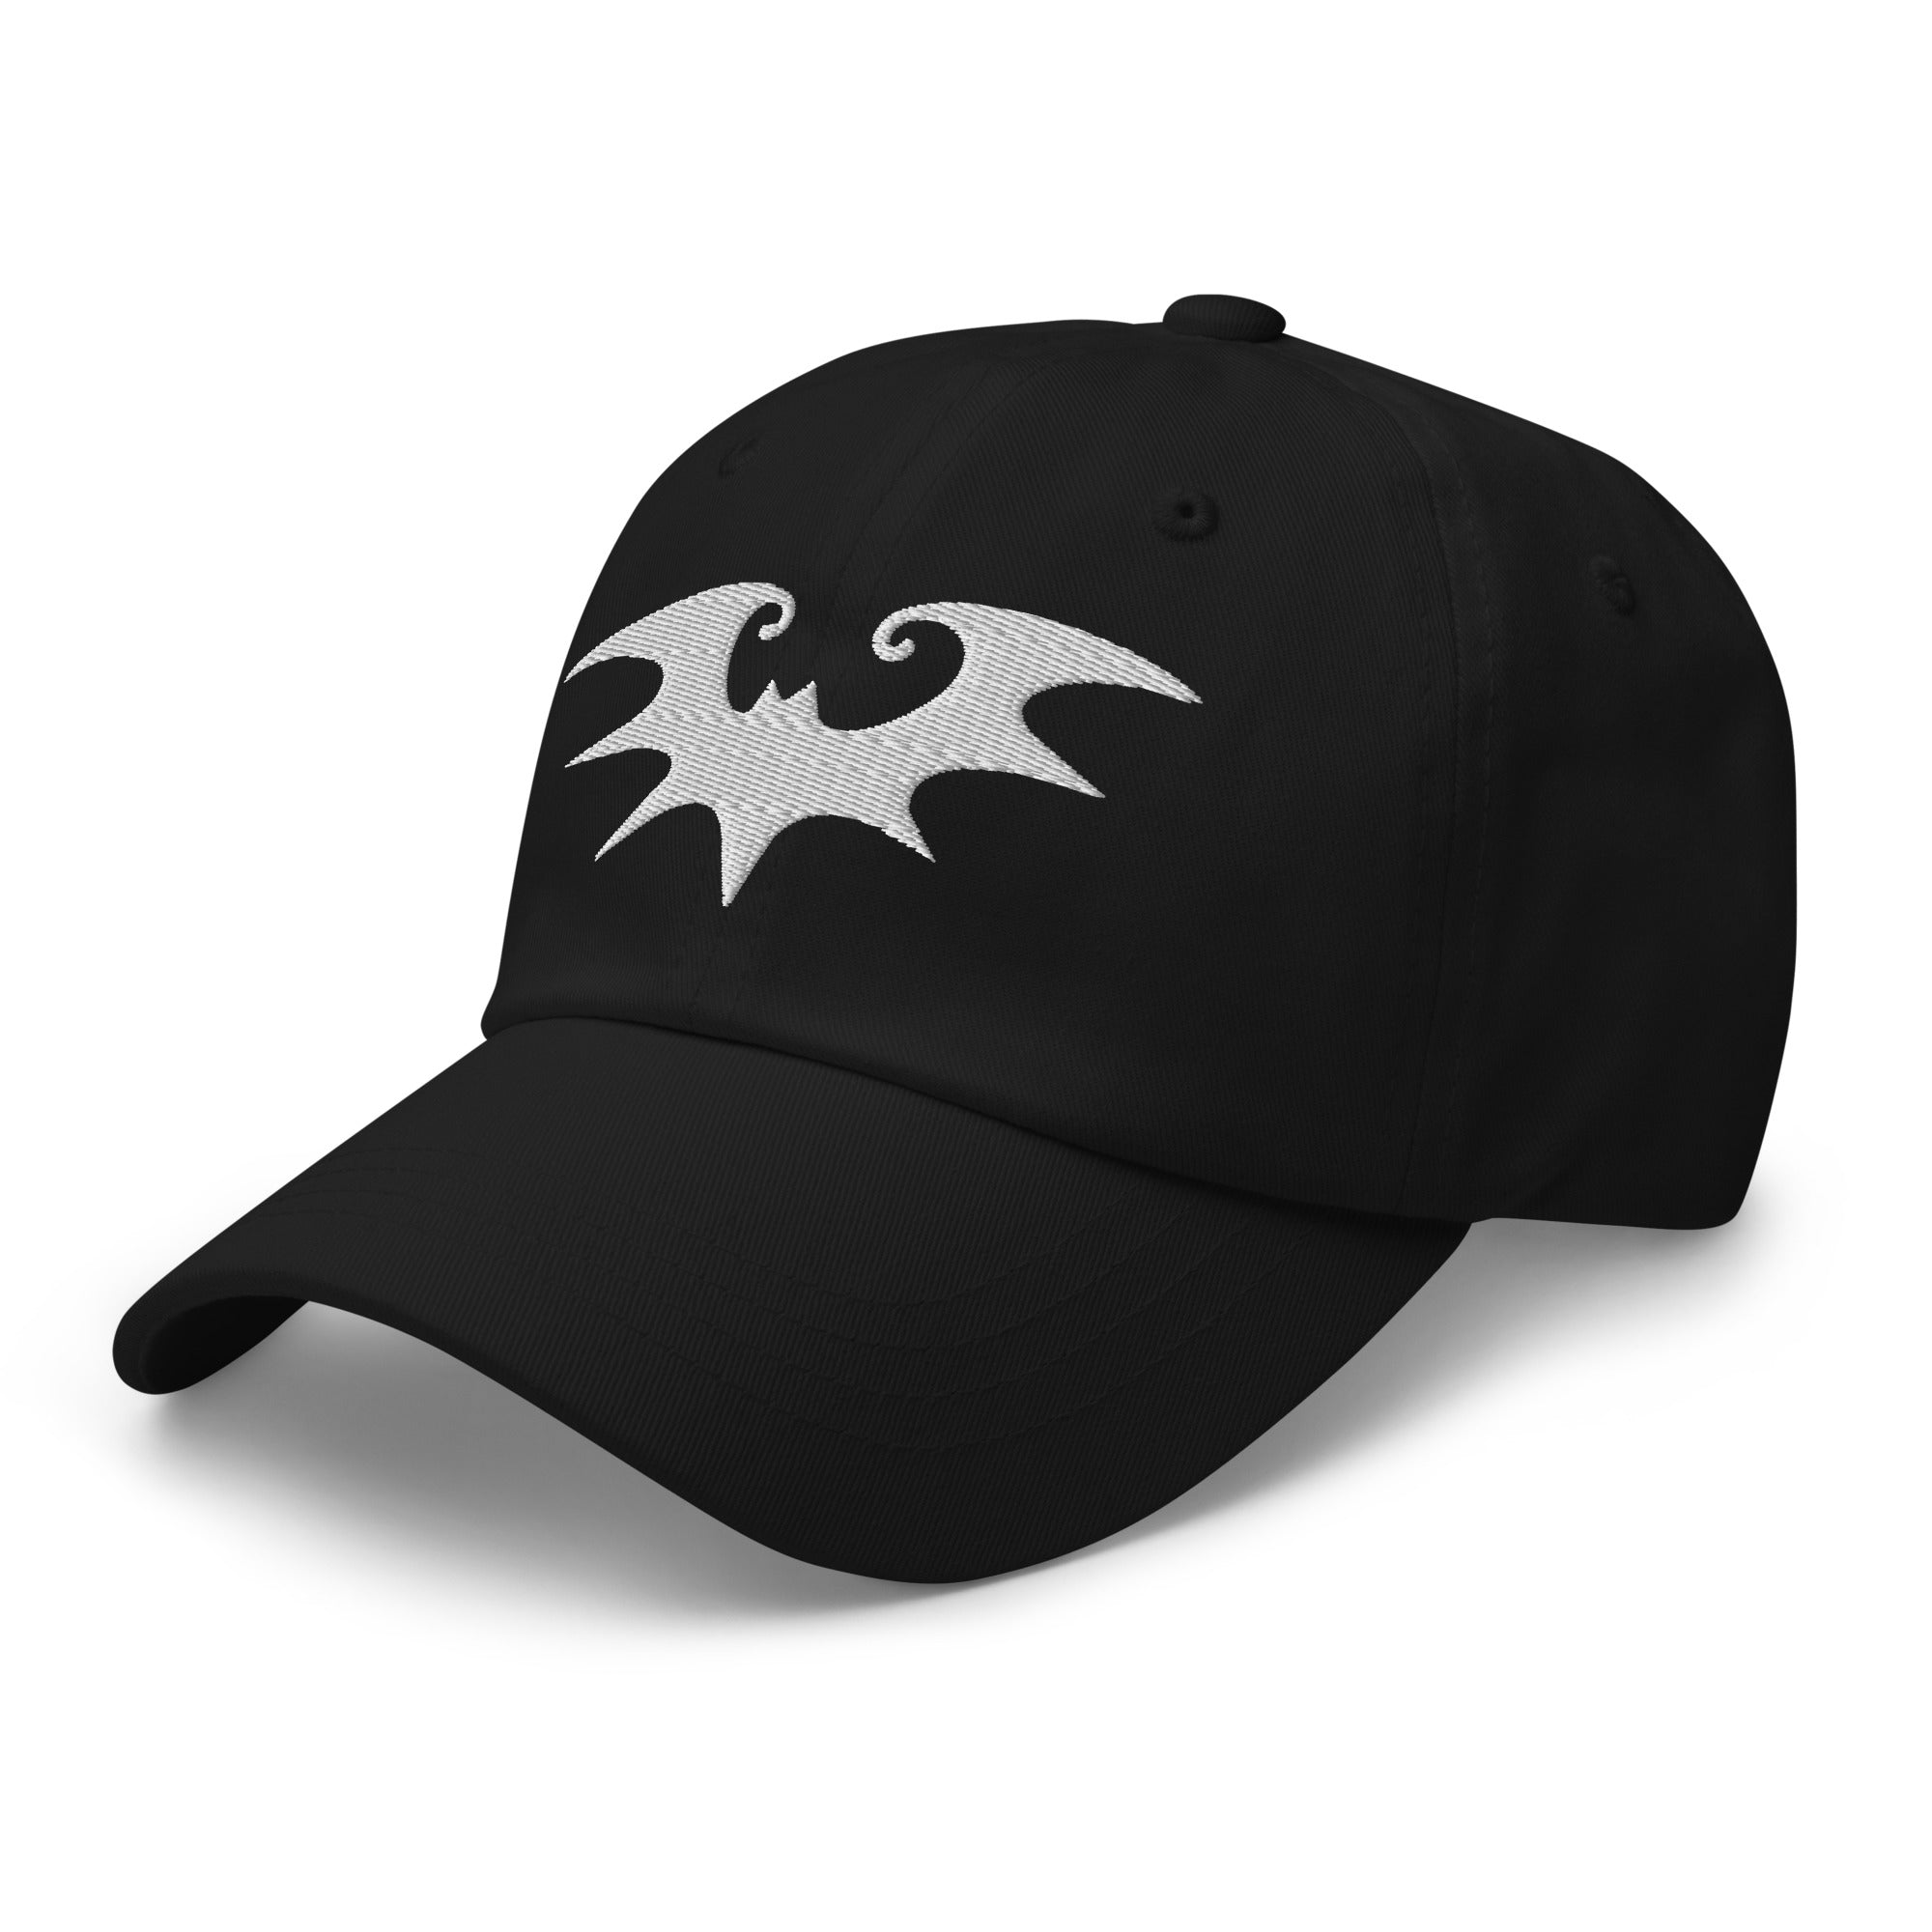 Spooky Goth Vampire Bat Embroidered Baseball Cap Dad hat - Edge of Life Designs